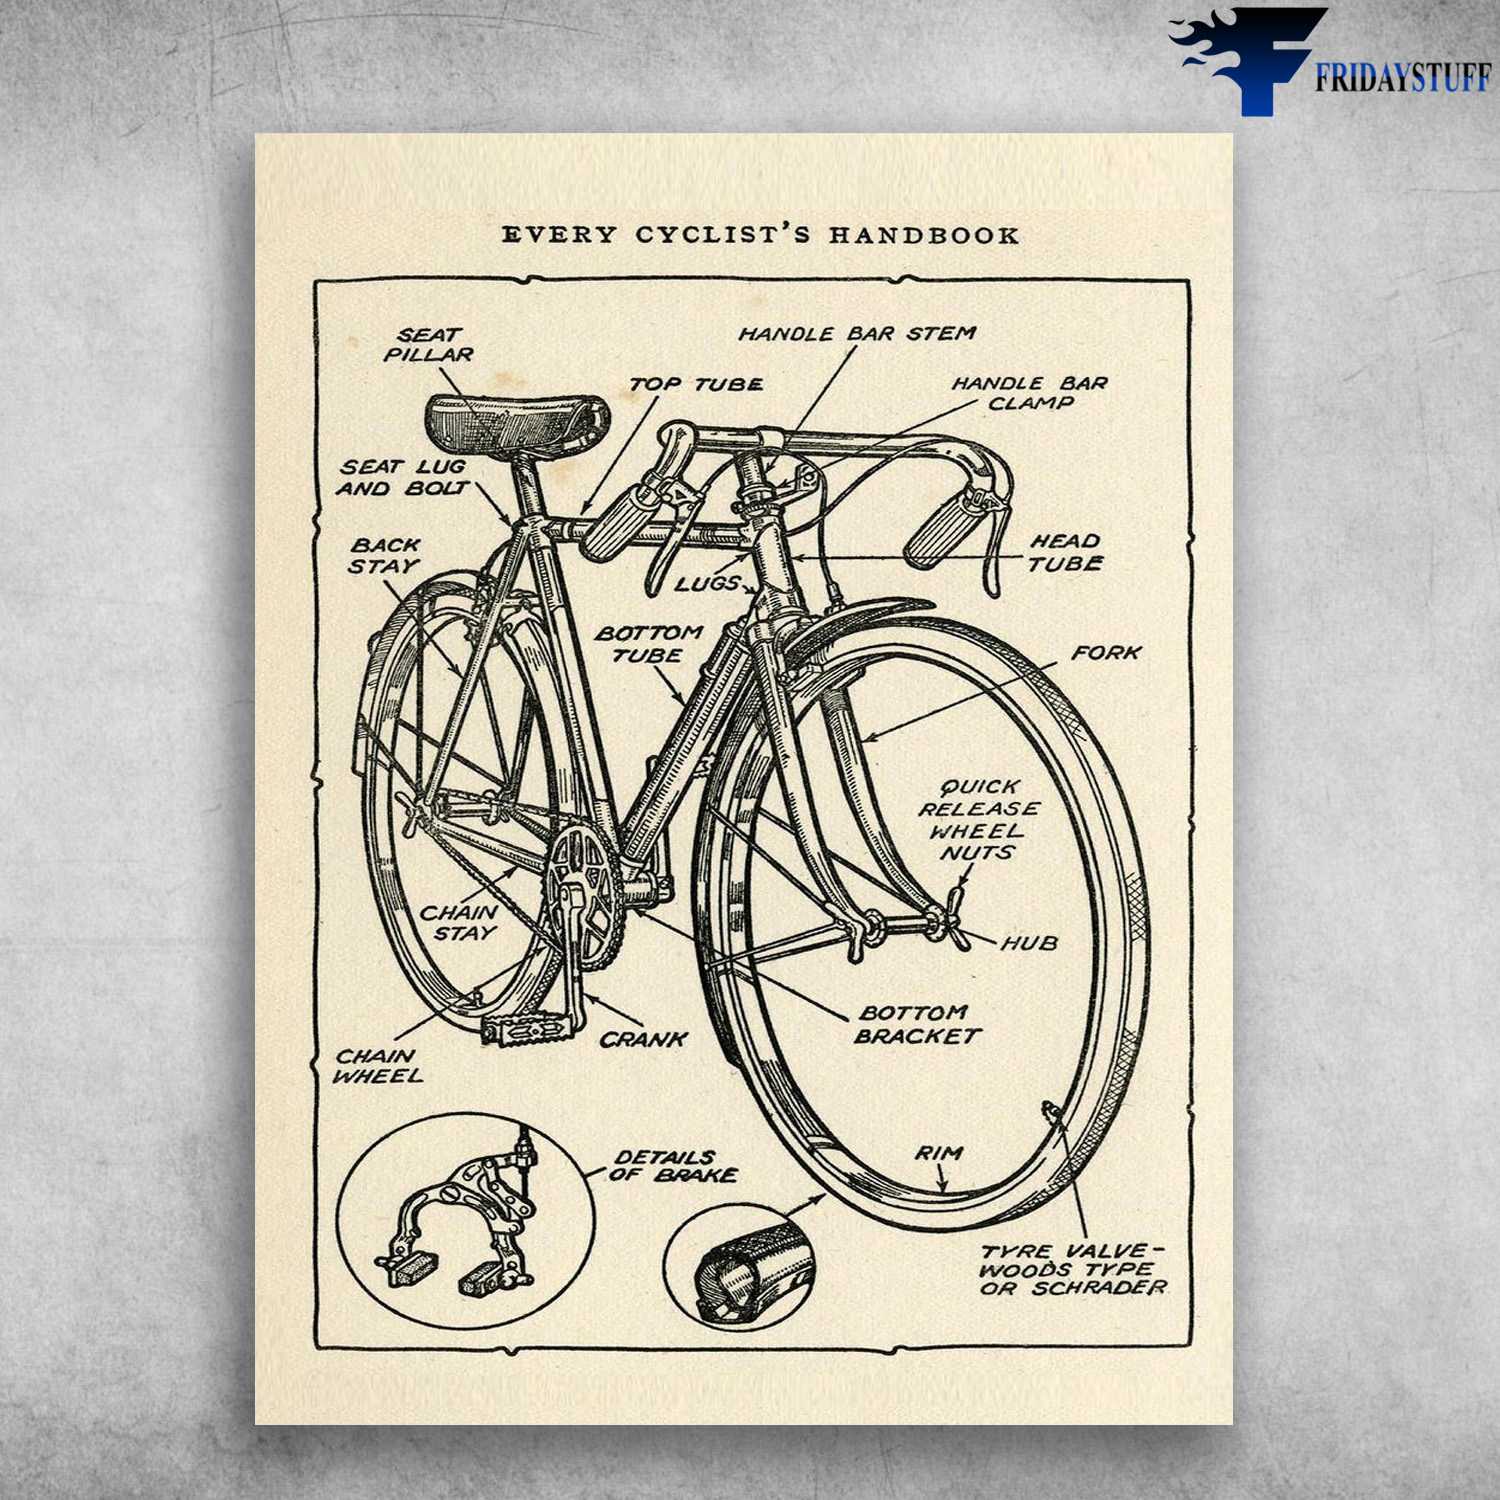 Bicycle Parts - Every Cyclist's Handbook, Seat Pillar, Handle Bar Stem, Handle Bar Clamp